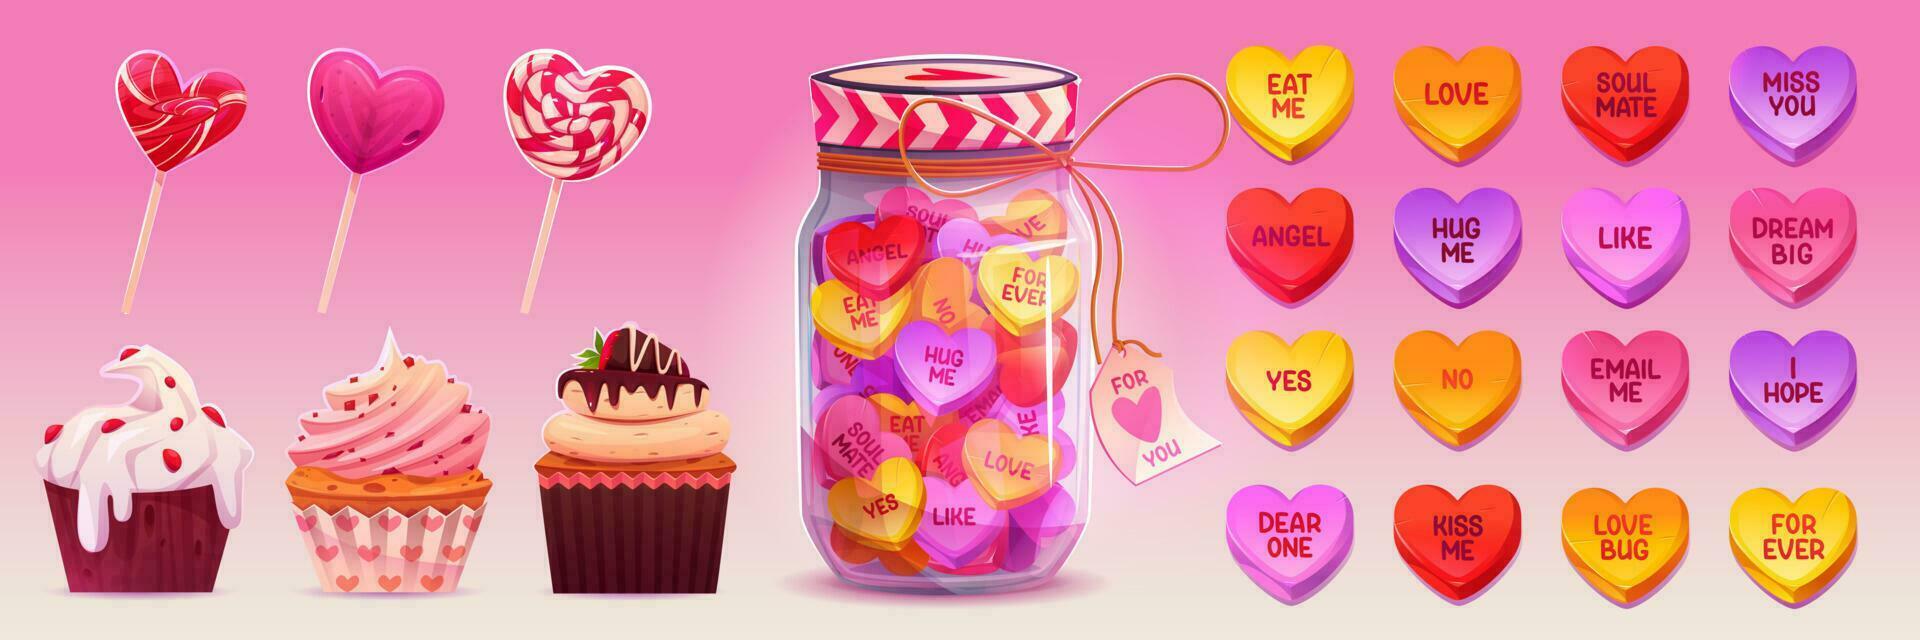 Colorful conversation candies, lollipops, muffins vector